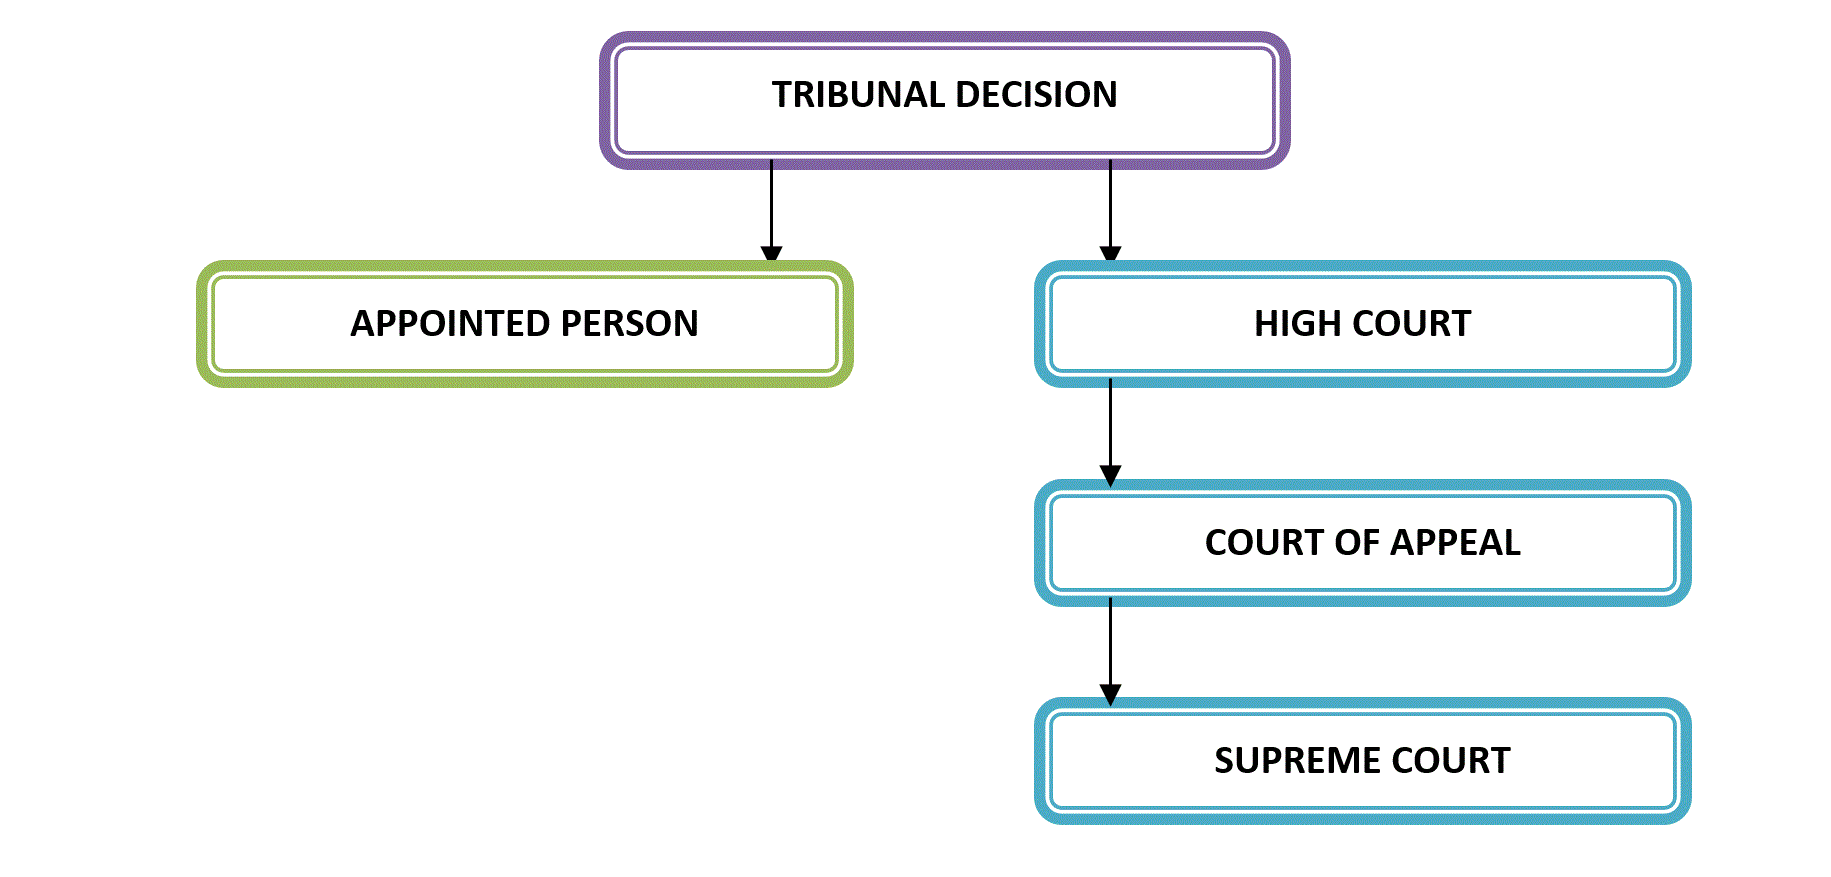 Tribunal decision